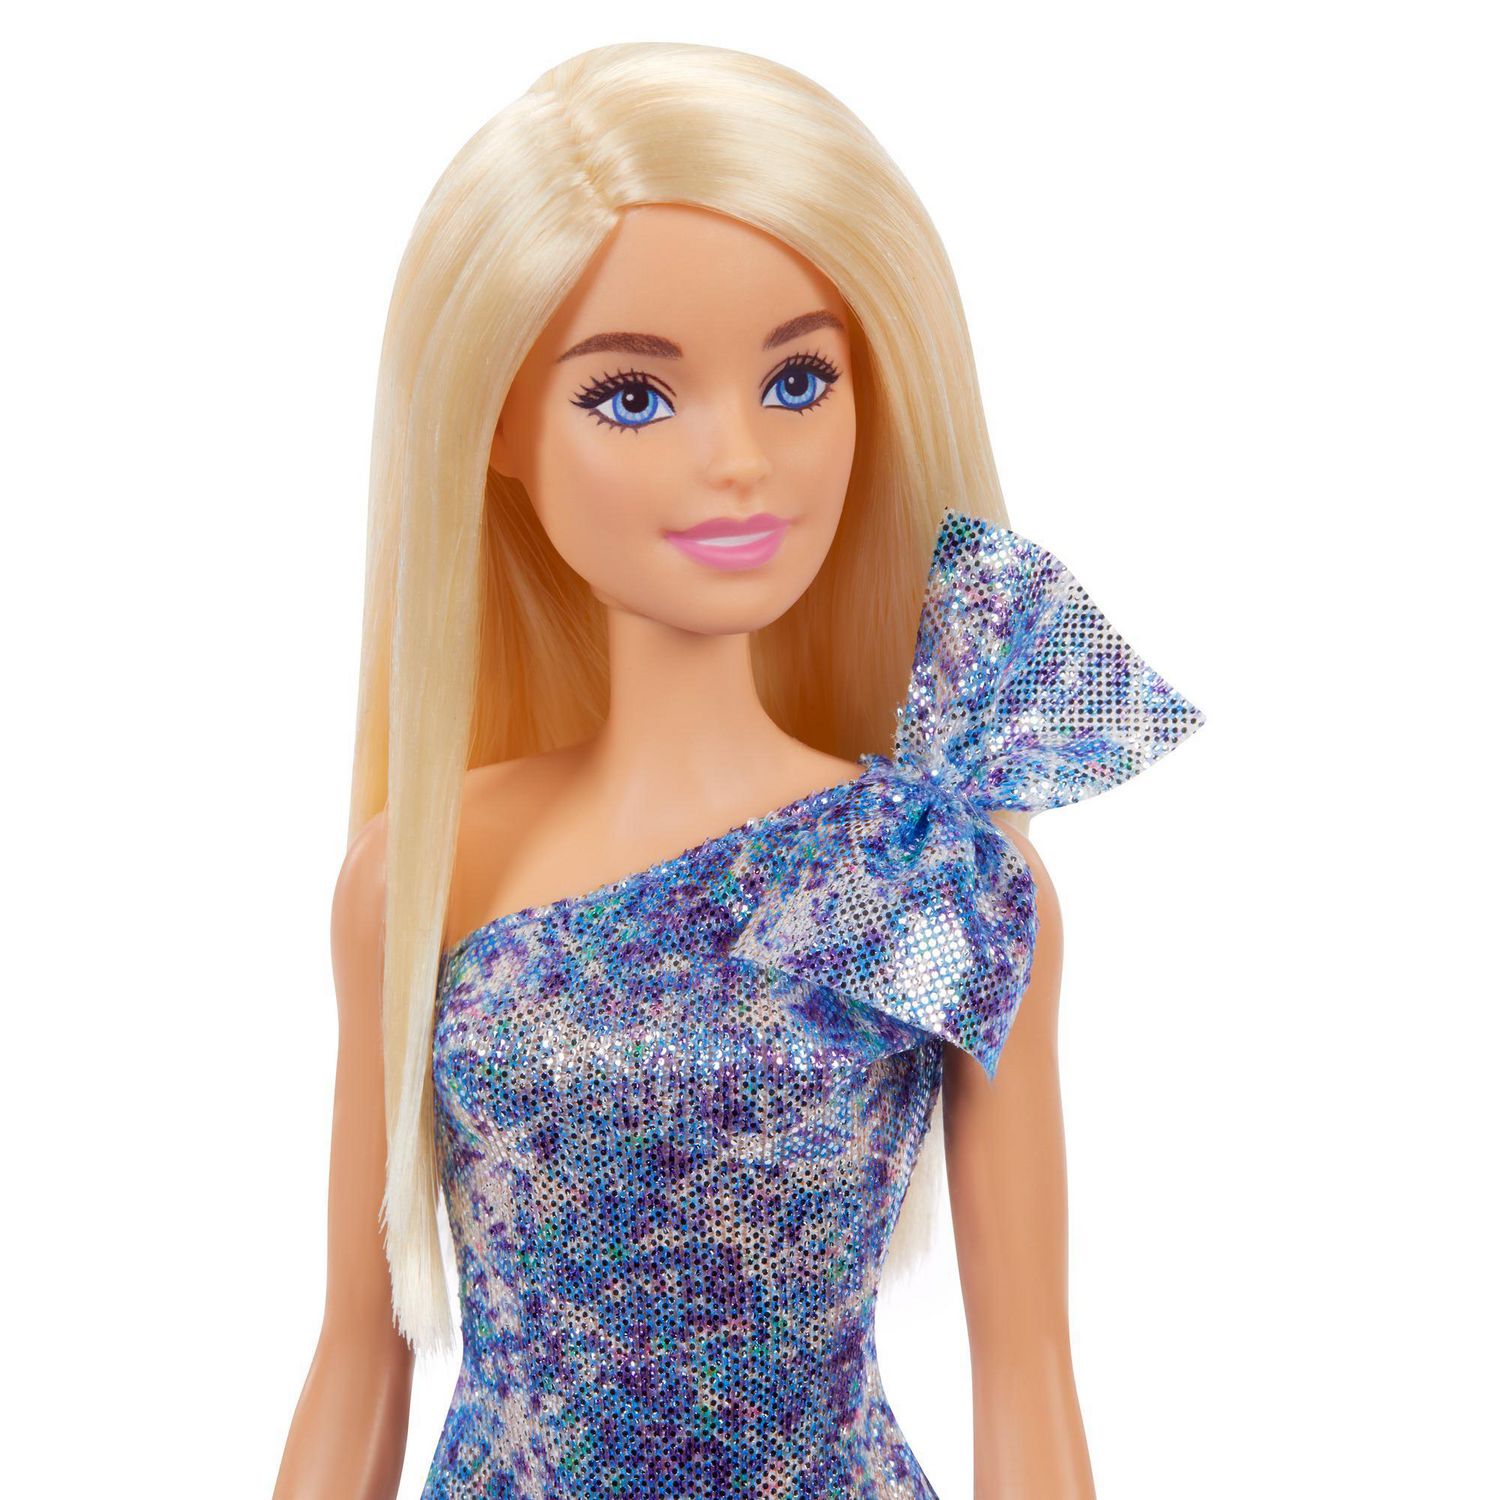 Barbie Doll, Blonde, Wearing Shimmery Blue Dress, Silvery Shoes